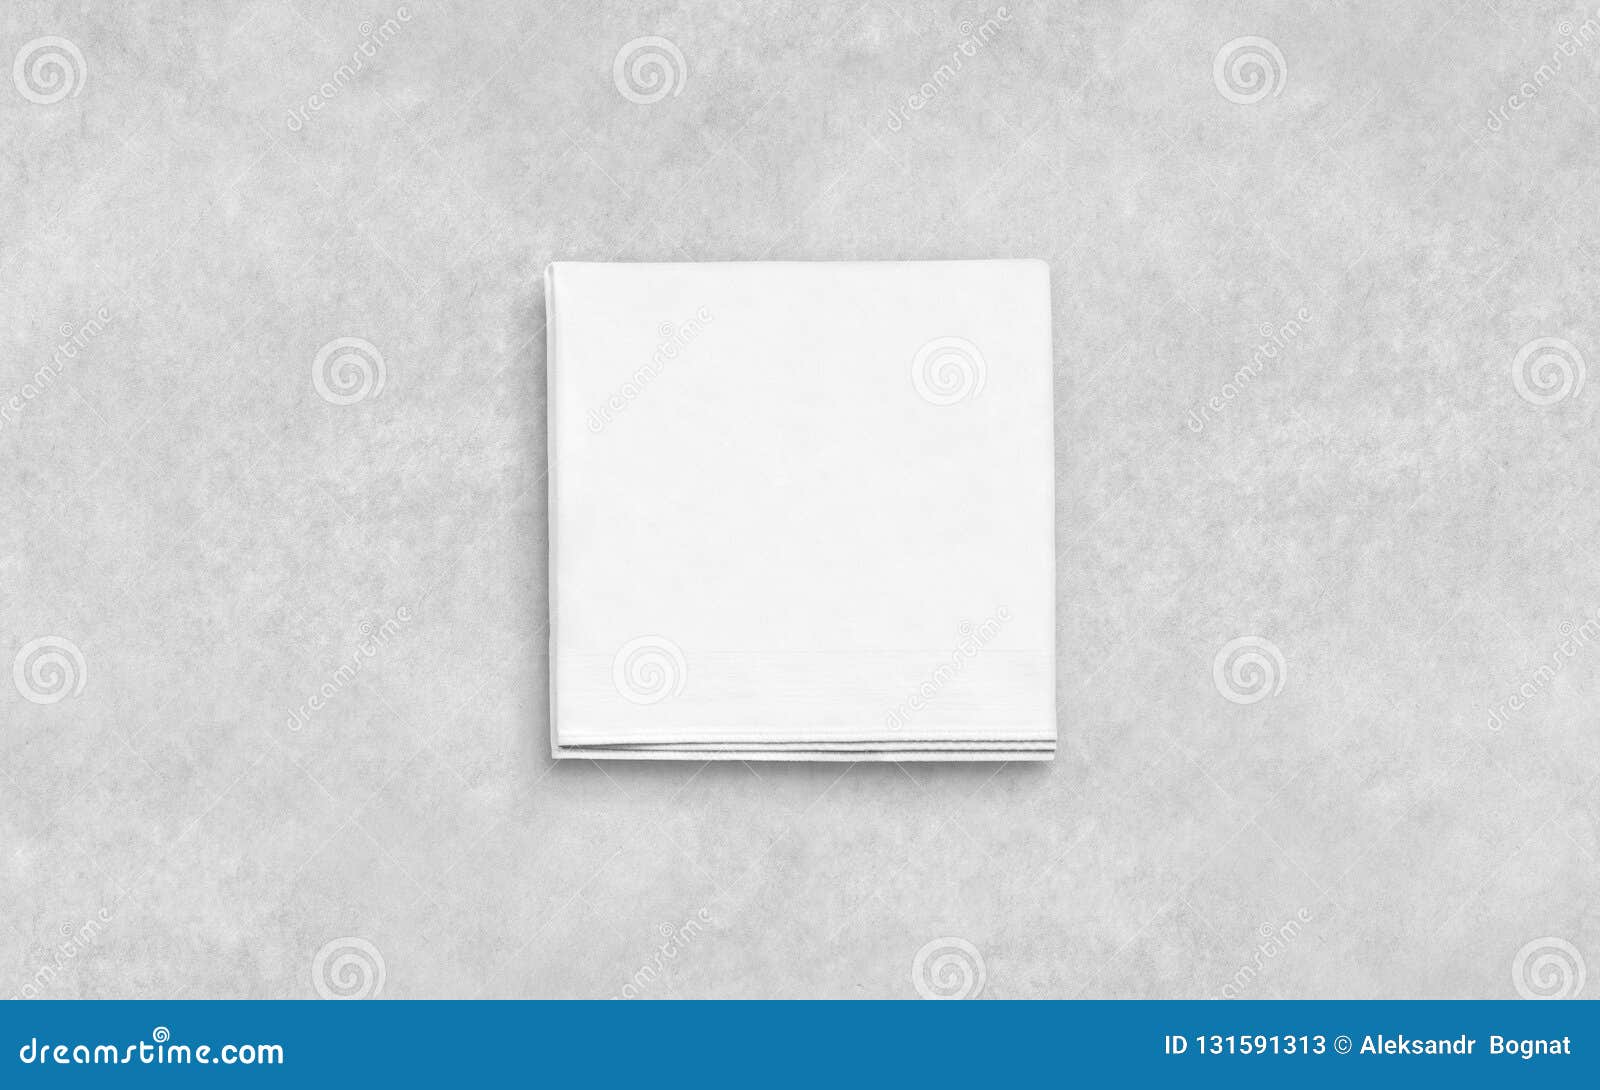 Download Blank White Folded Napkin On Textured Surface Mockup Stock Image Image Of Bathroom Napkin 131591313